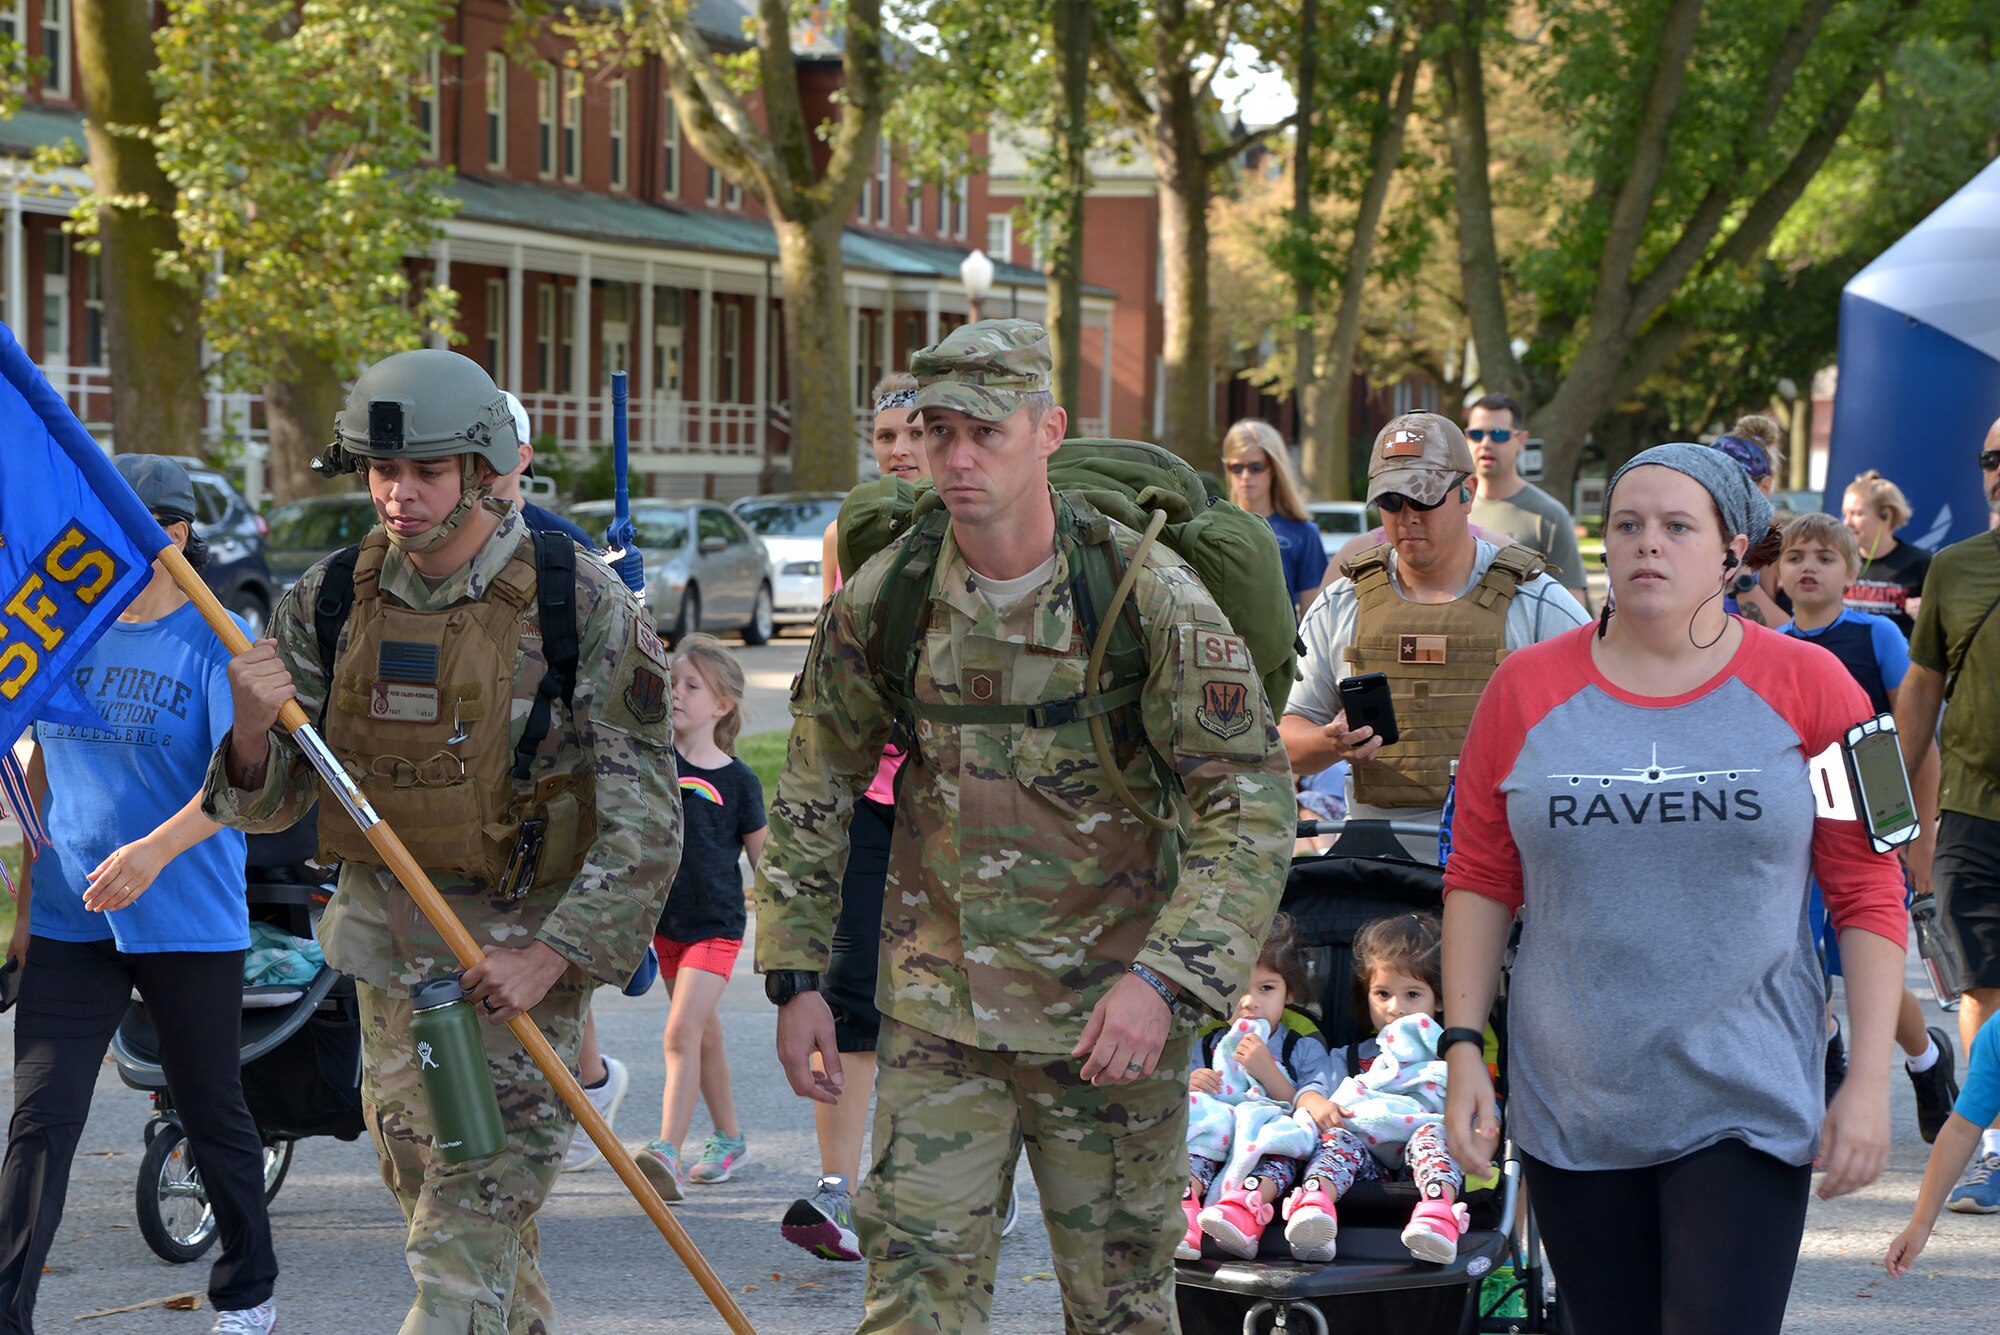 Airmen in uniform, civilians and children walking in large group